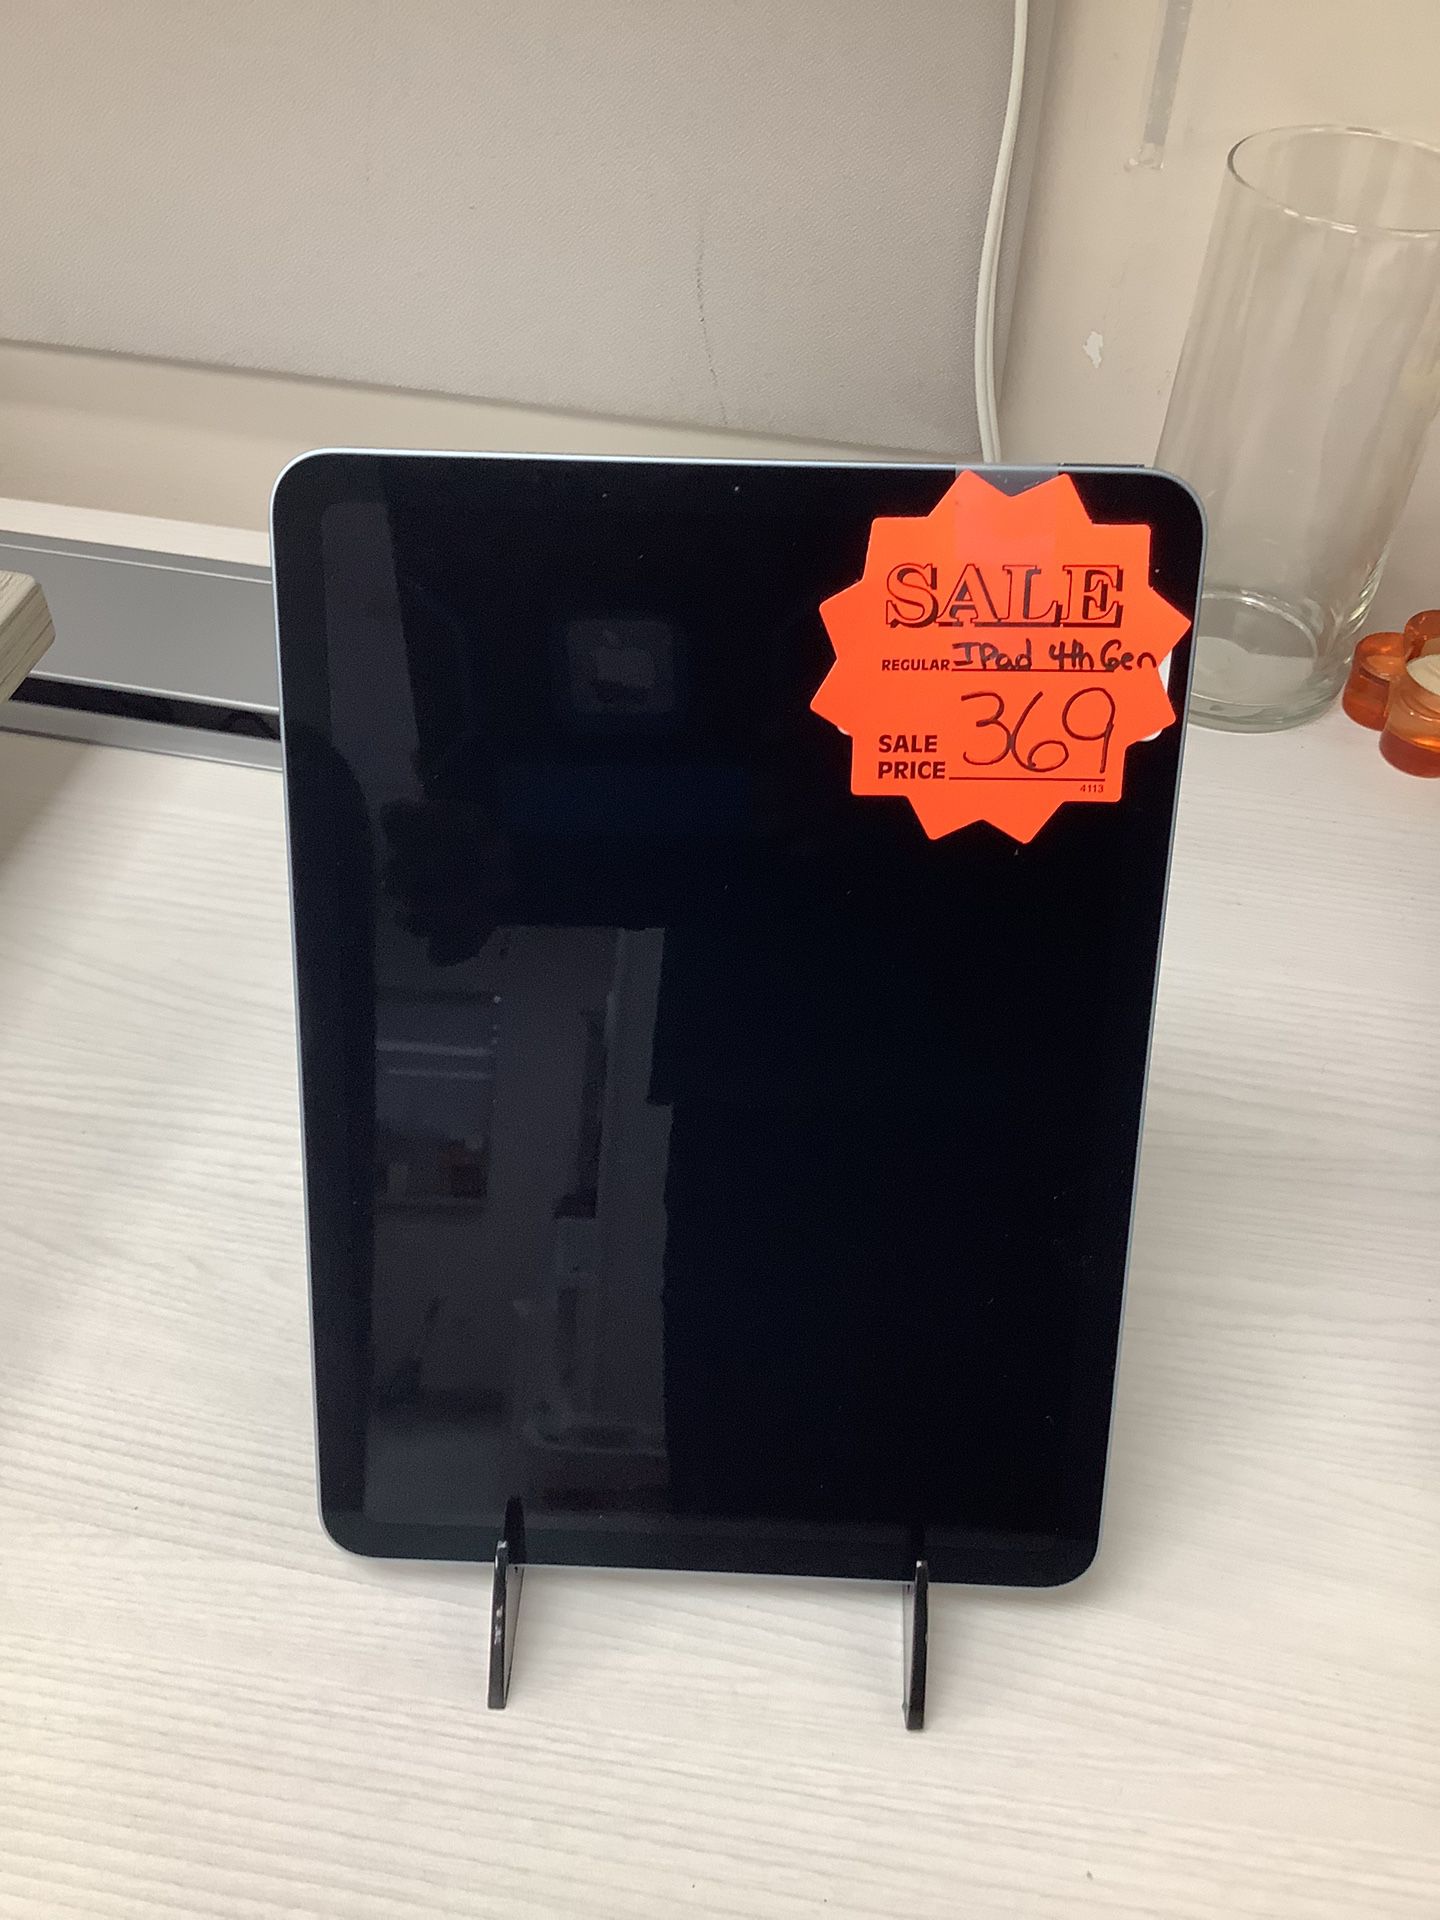 iPad 4th Gen $369 (Rj Cash Pawnshop 2505 NW 183rd St)